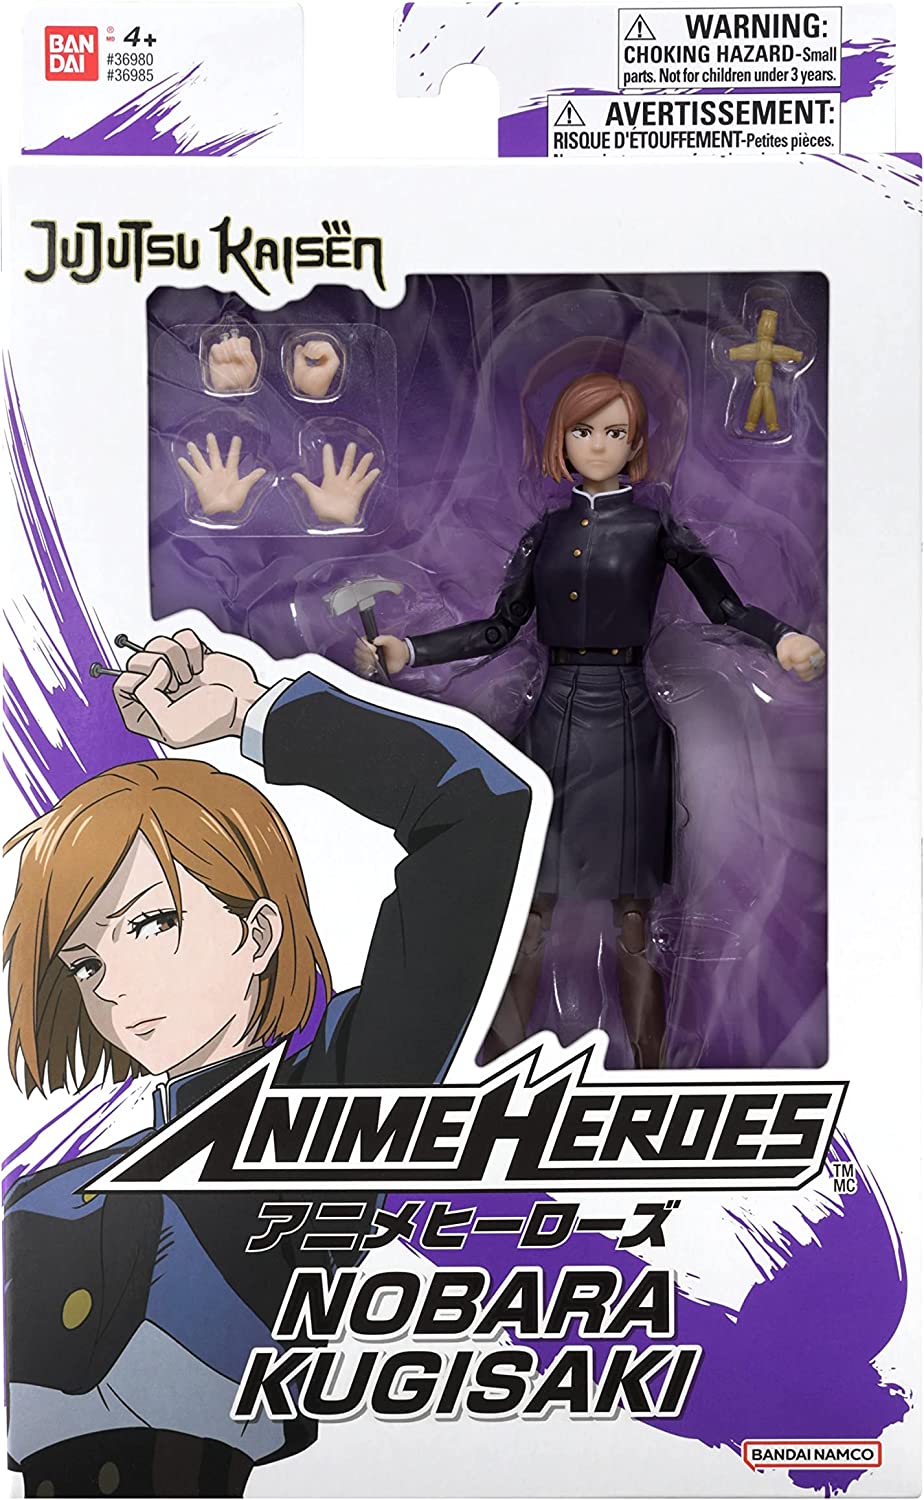 Bandai Anime Heroes Jujutsu Kaisen Figure 16cm - Nobara Kugisaki